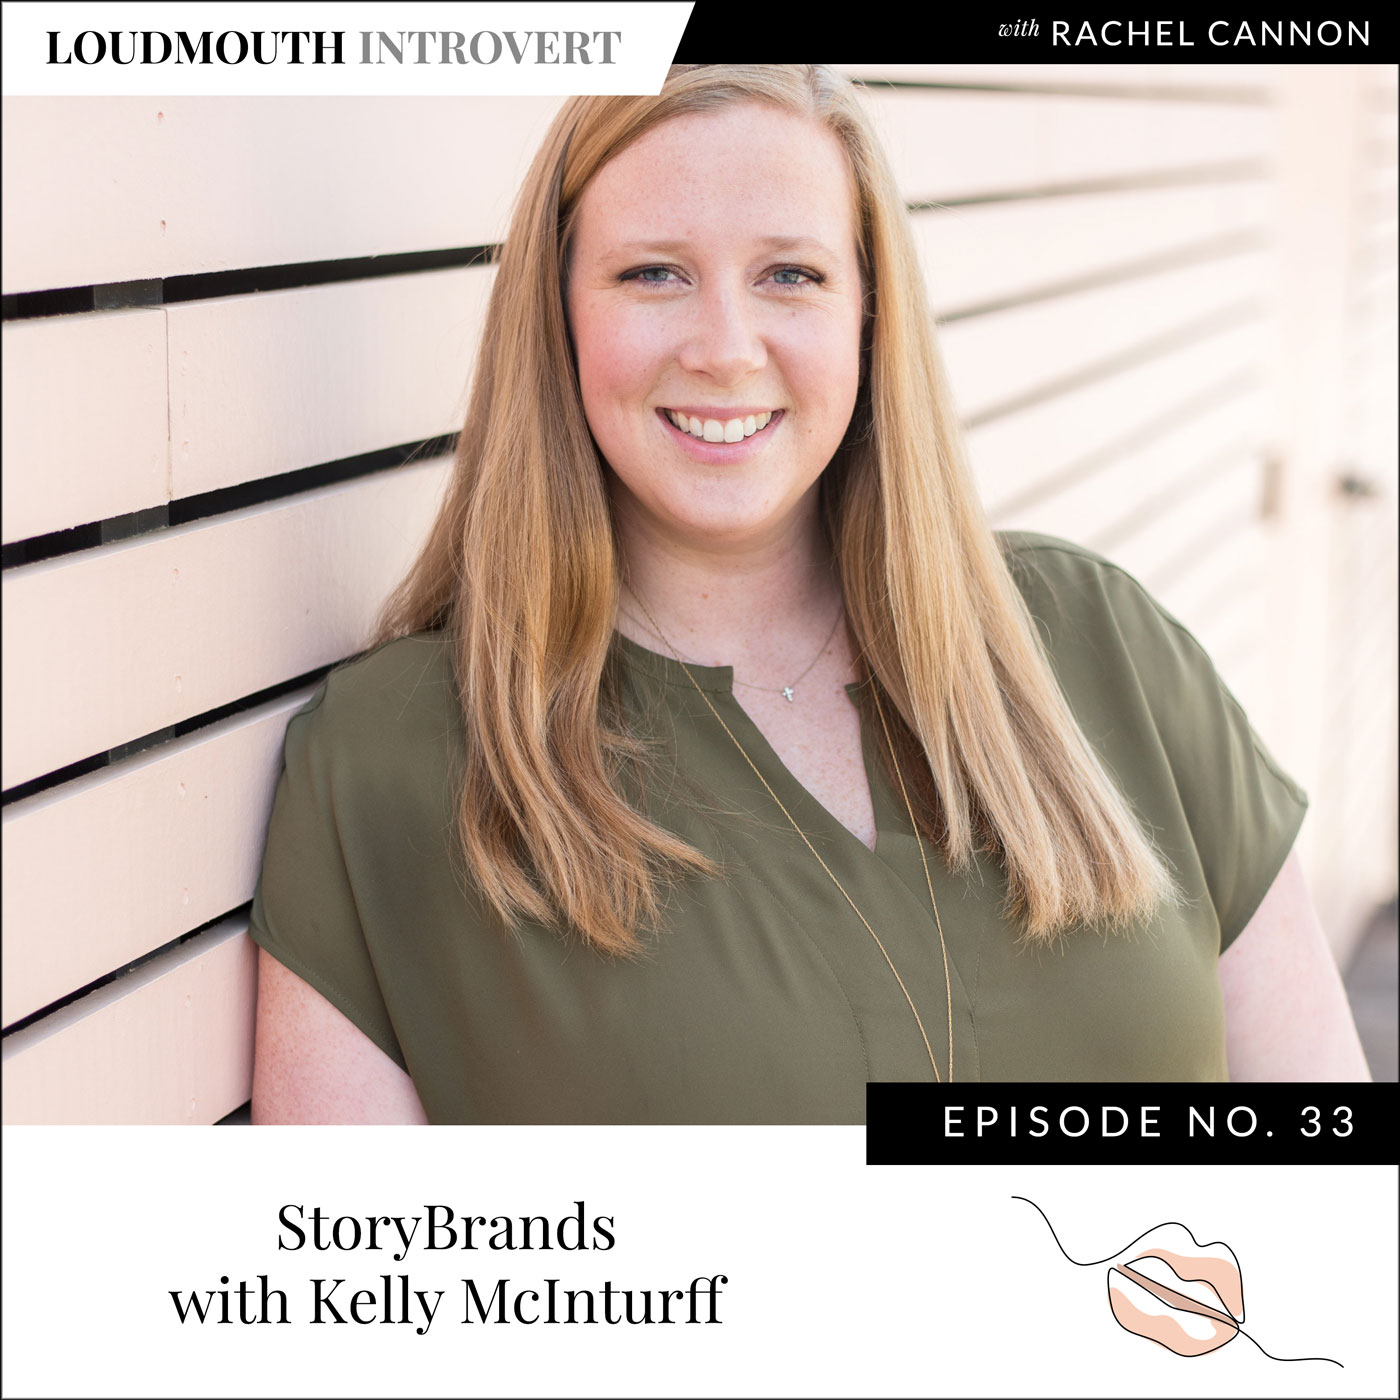 StoryBrands with Kelly McInturff